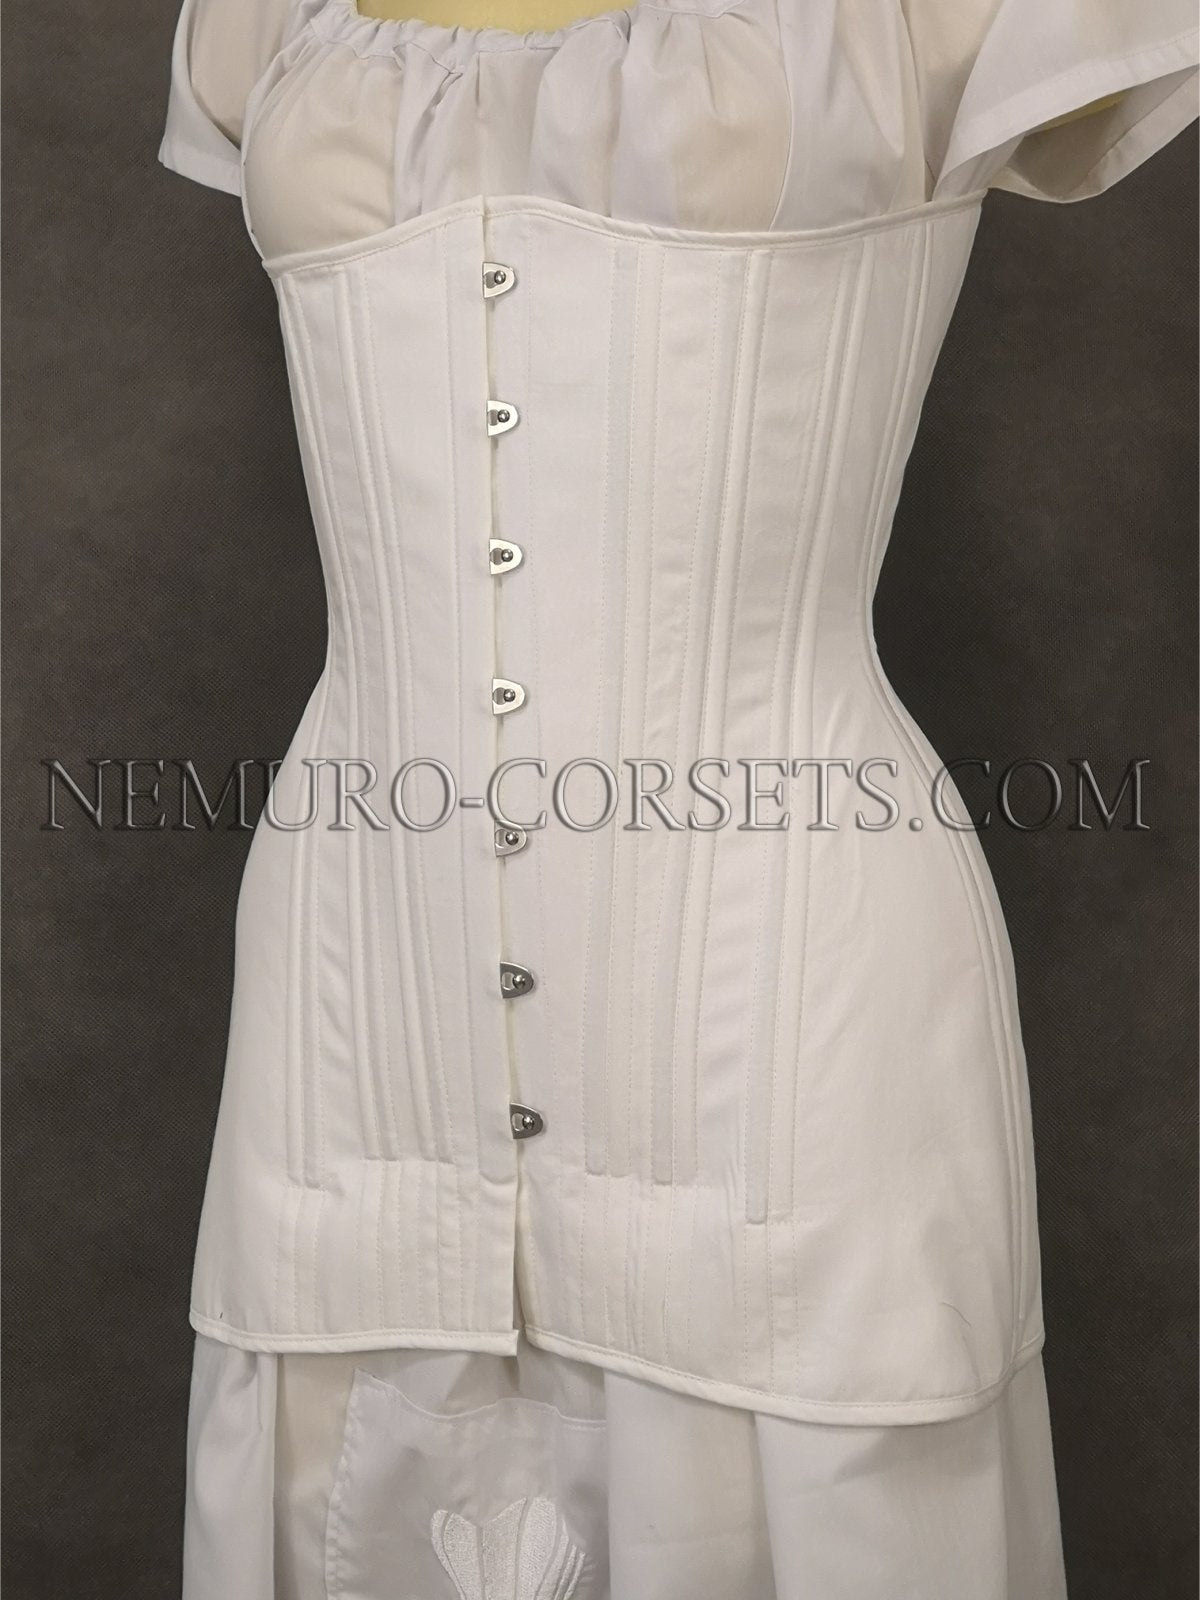 1910s Underbust Corset  Titanic corset, Corset, Edwardian corsets